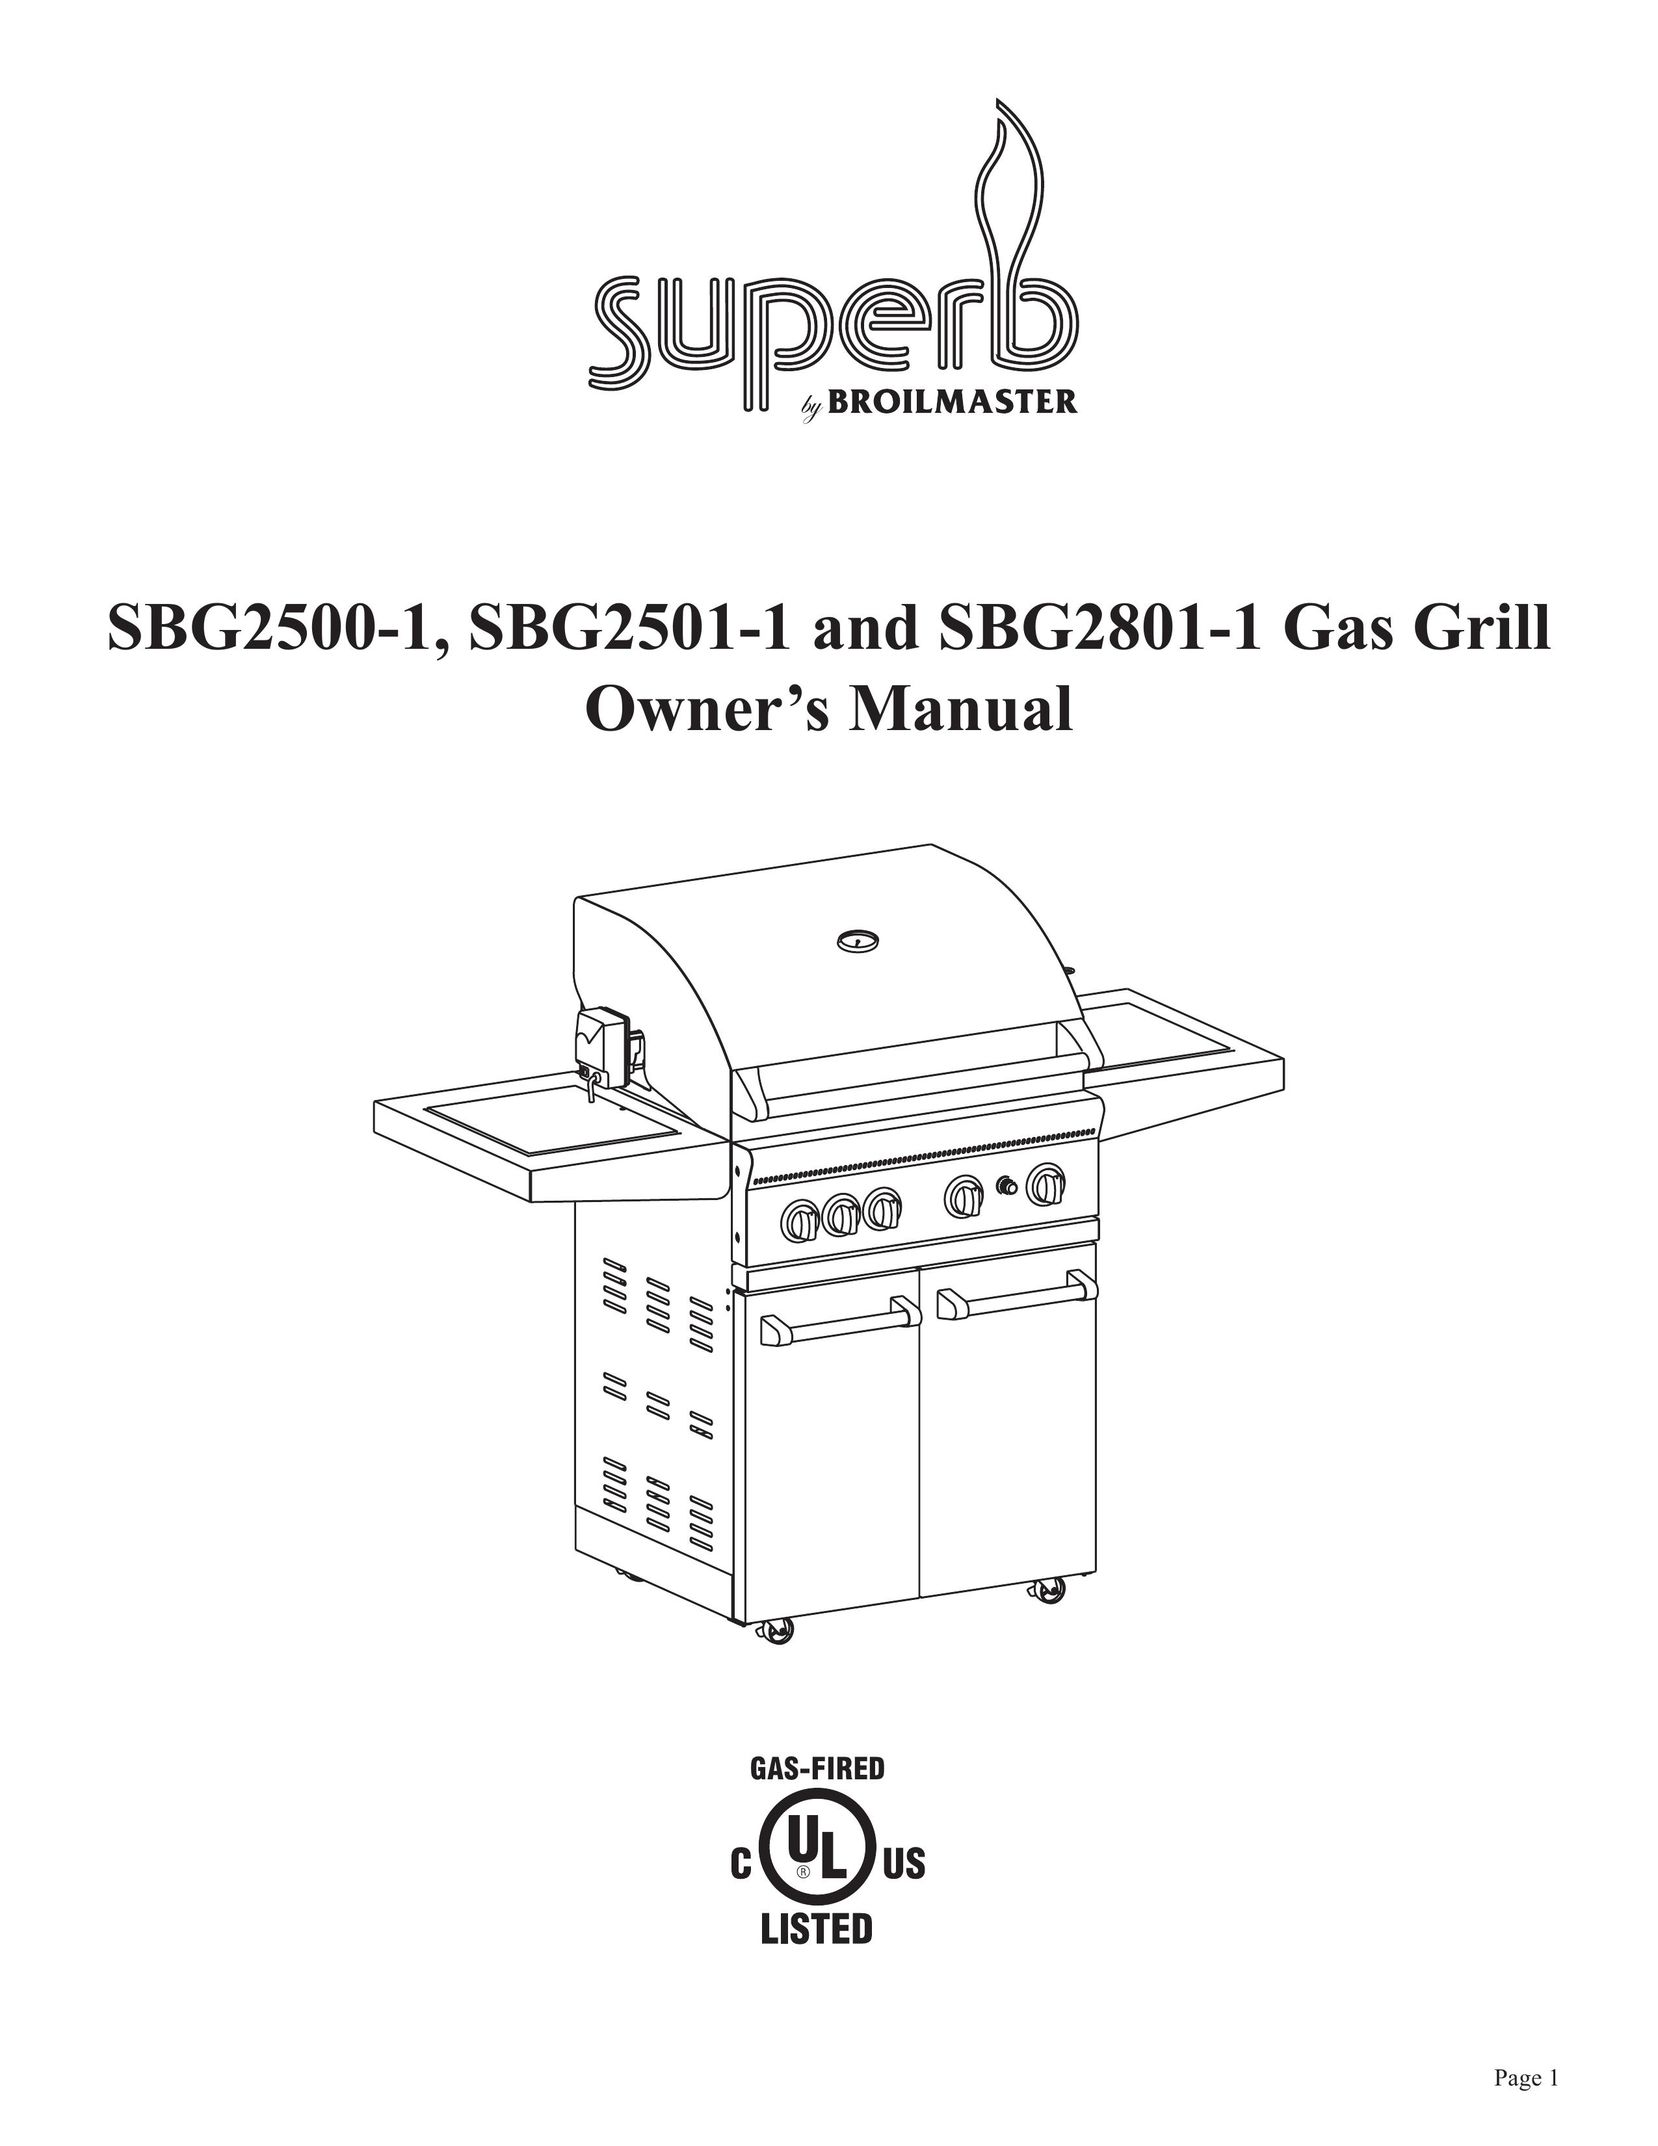 Broilmaster SBG2501-1 Kitchen Grill User Manual